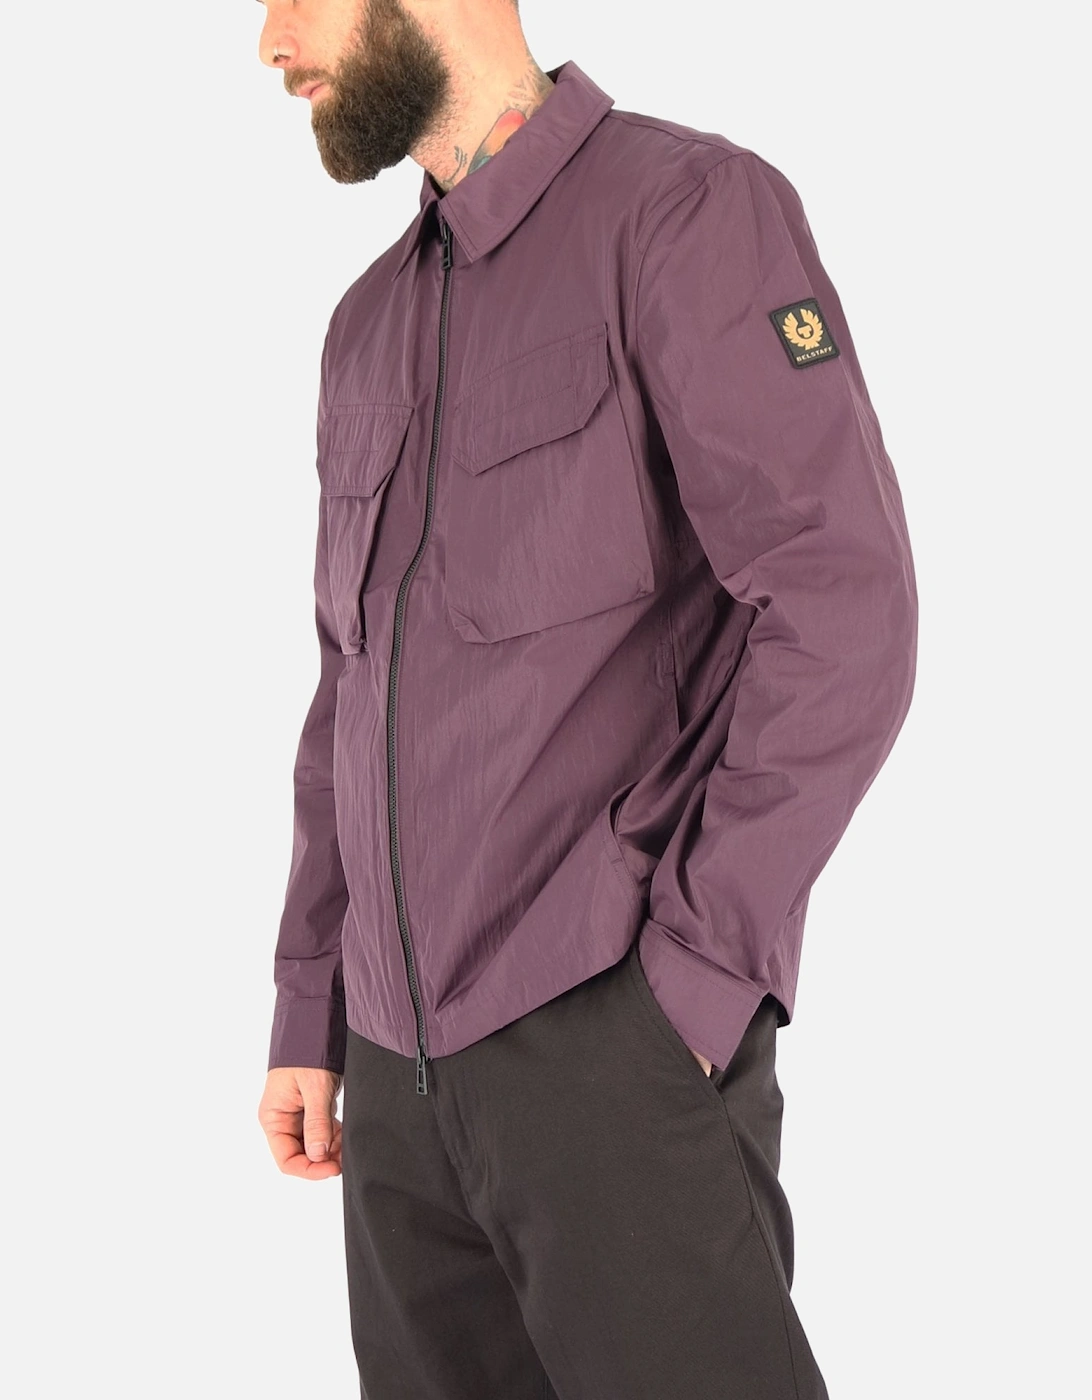 Staunton Double Pocket Purple Overshirt Jacket